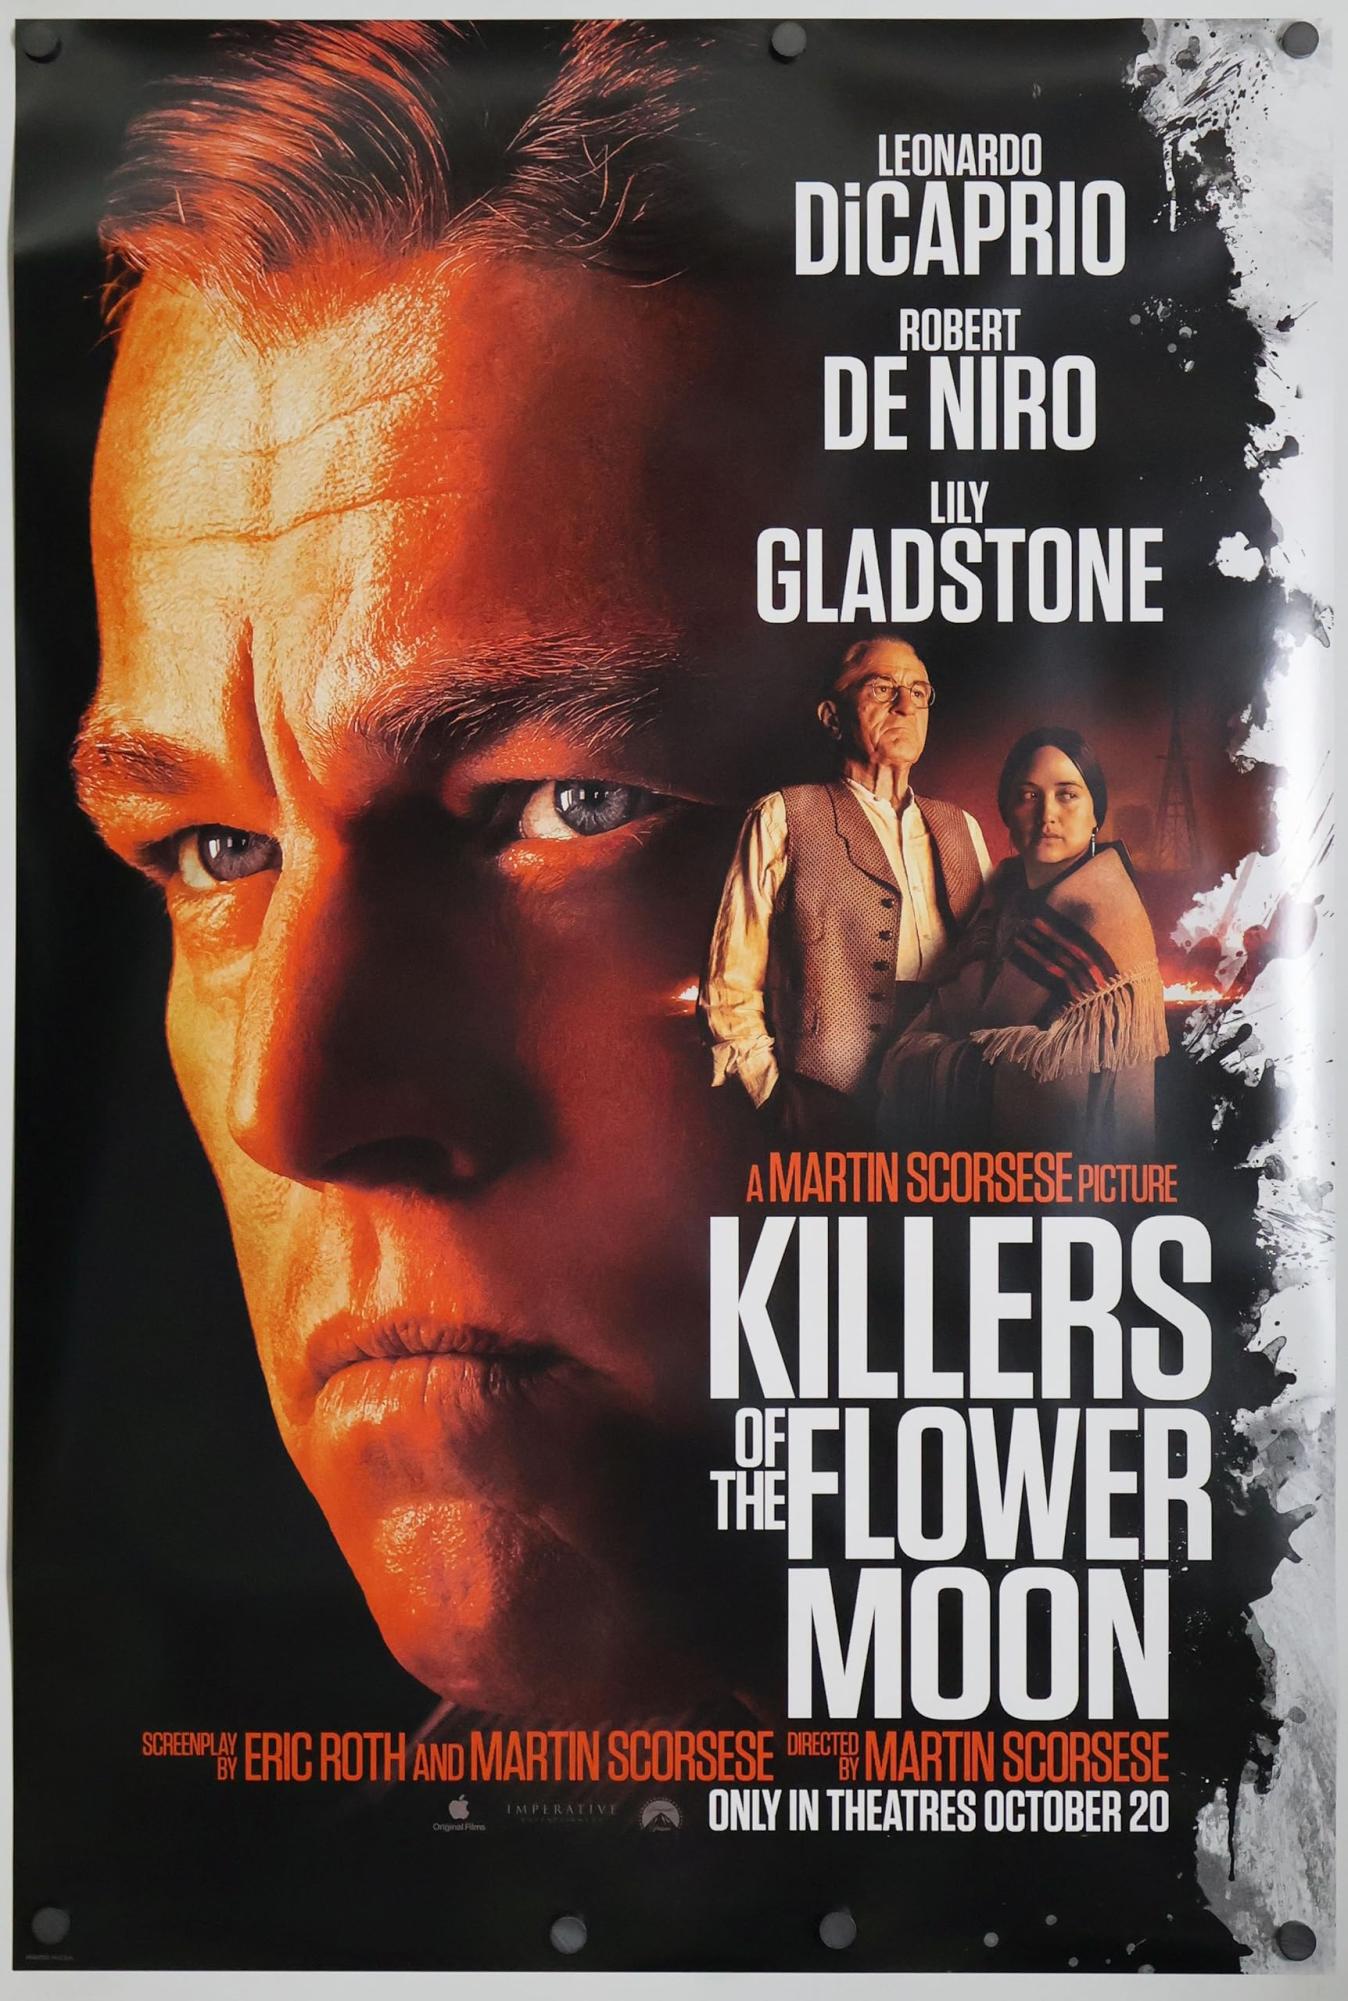 “Killers of the Flower Moon” by Dan Friedkin, Bradley Thomas, Martin Scorsese and Daniel Lupi, Producers